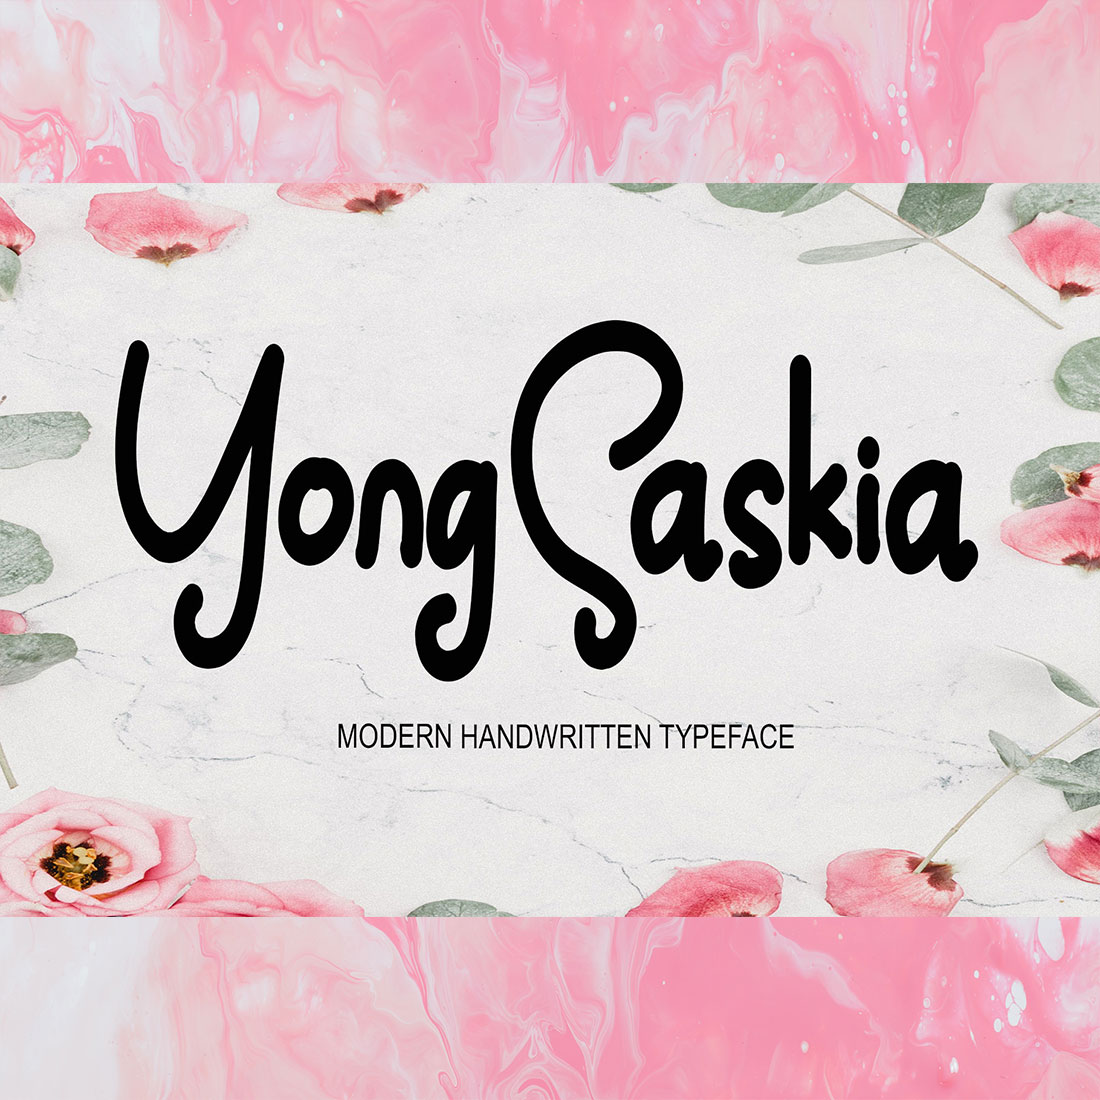 Script Font Signature Yong Saskia cover image.